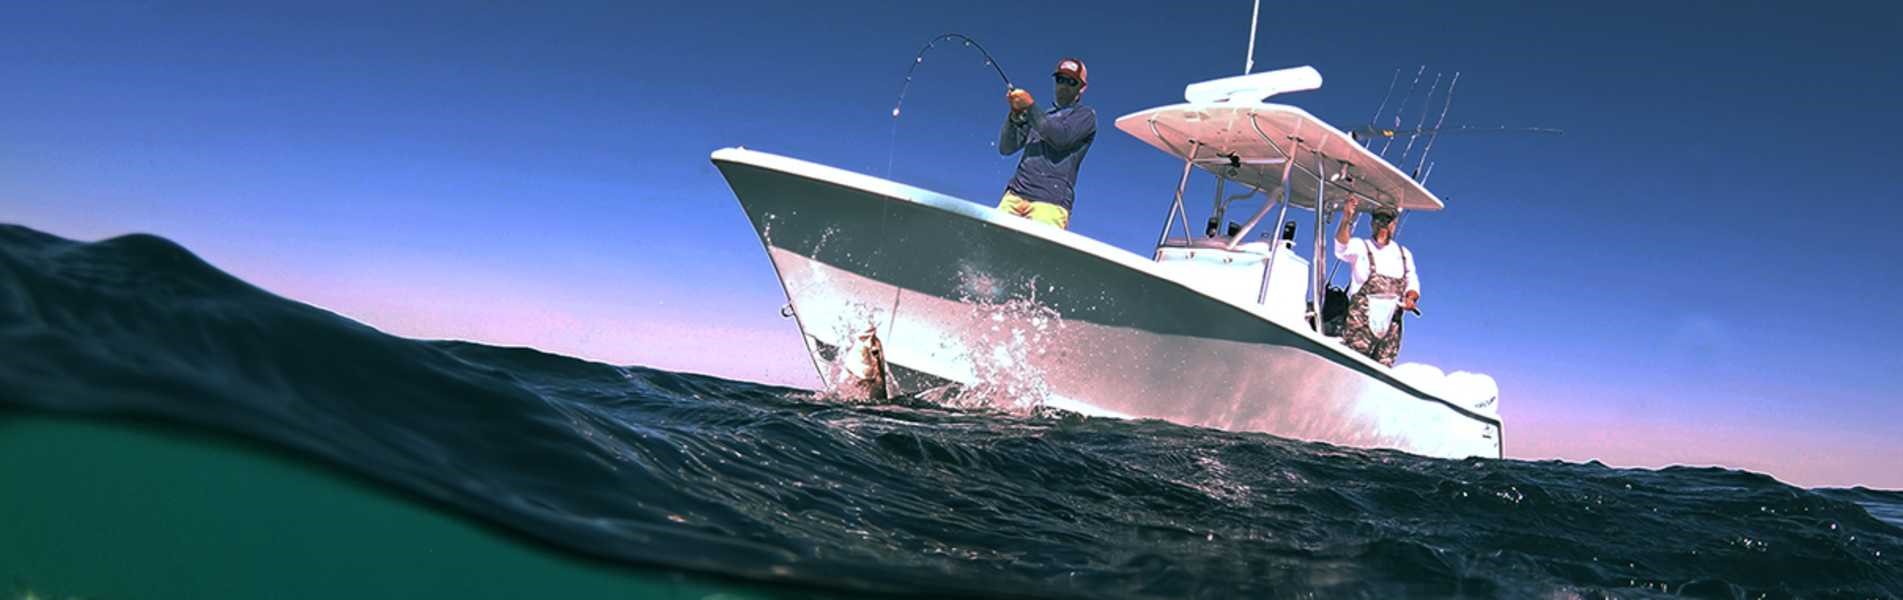 Fishing Charter Leads #9 - damianmartinez.com